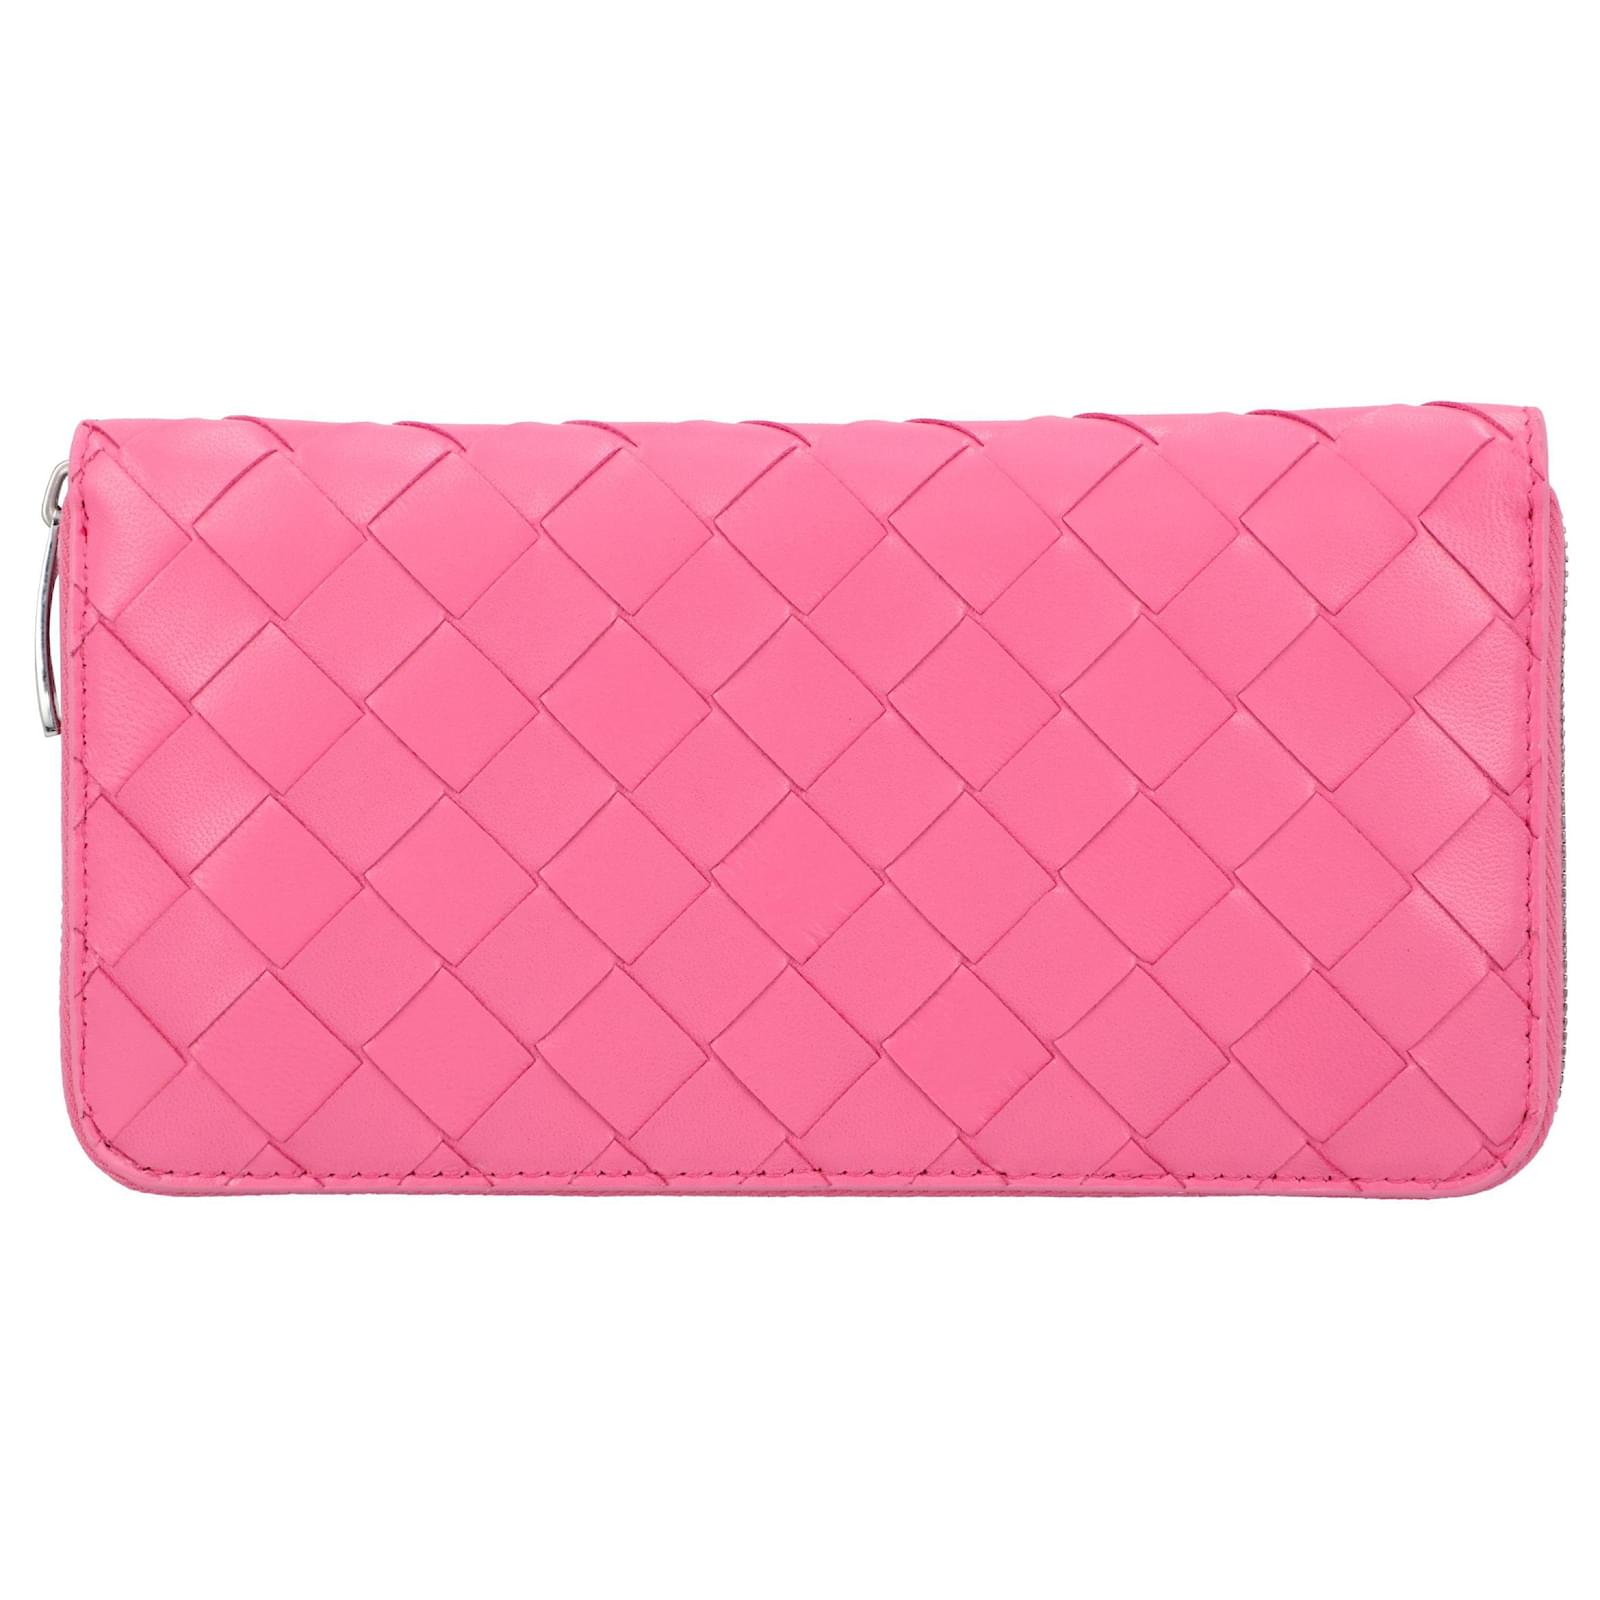 Bottega Veneta women zip around wallet in pink intrecciato calfskin ...